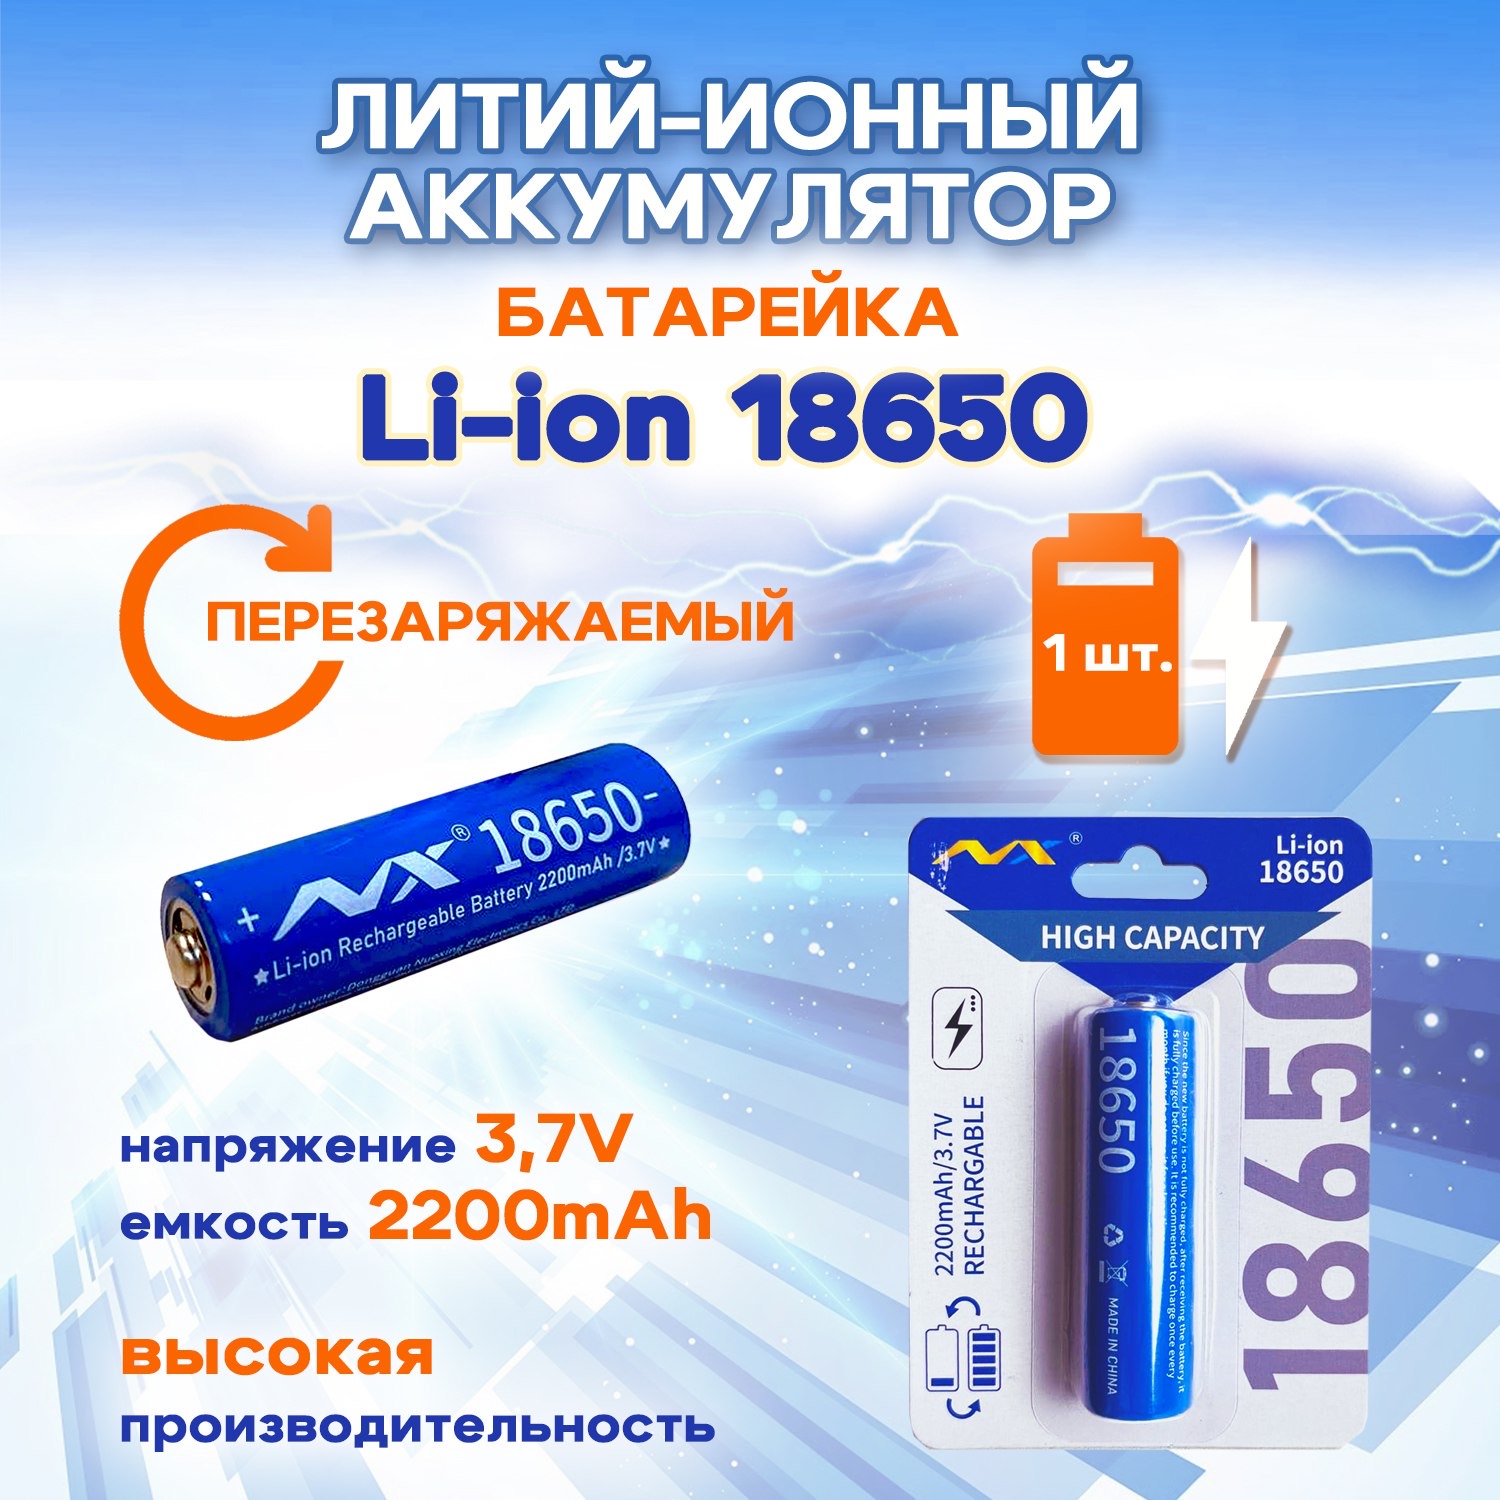 Батарейка-аккумулятор SUPER ENERGY 18650 3,7 В литий-ионный перезаряжаемый 2200 mAh, 1 шт аккумулятор для шуруповертов хитачи заряд